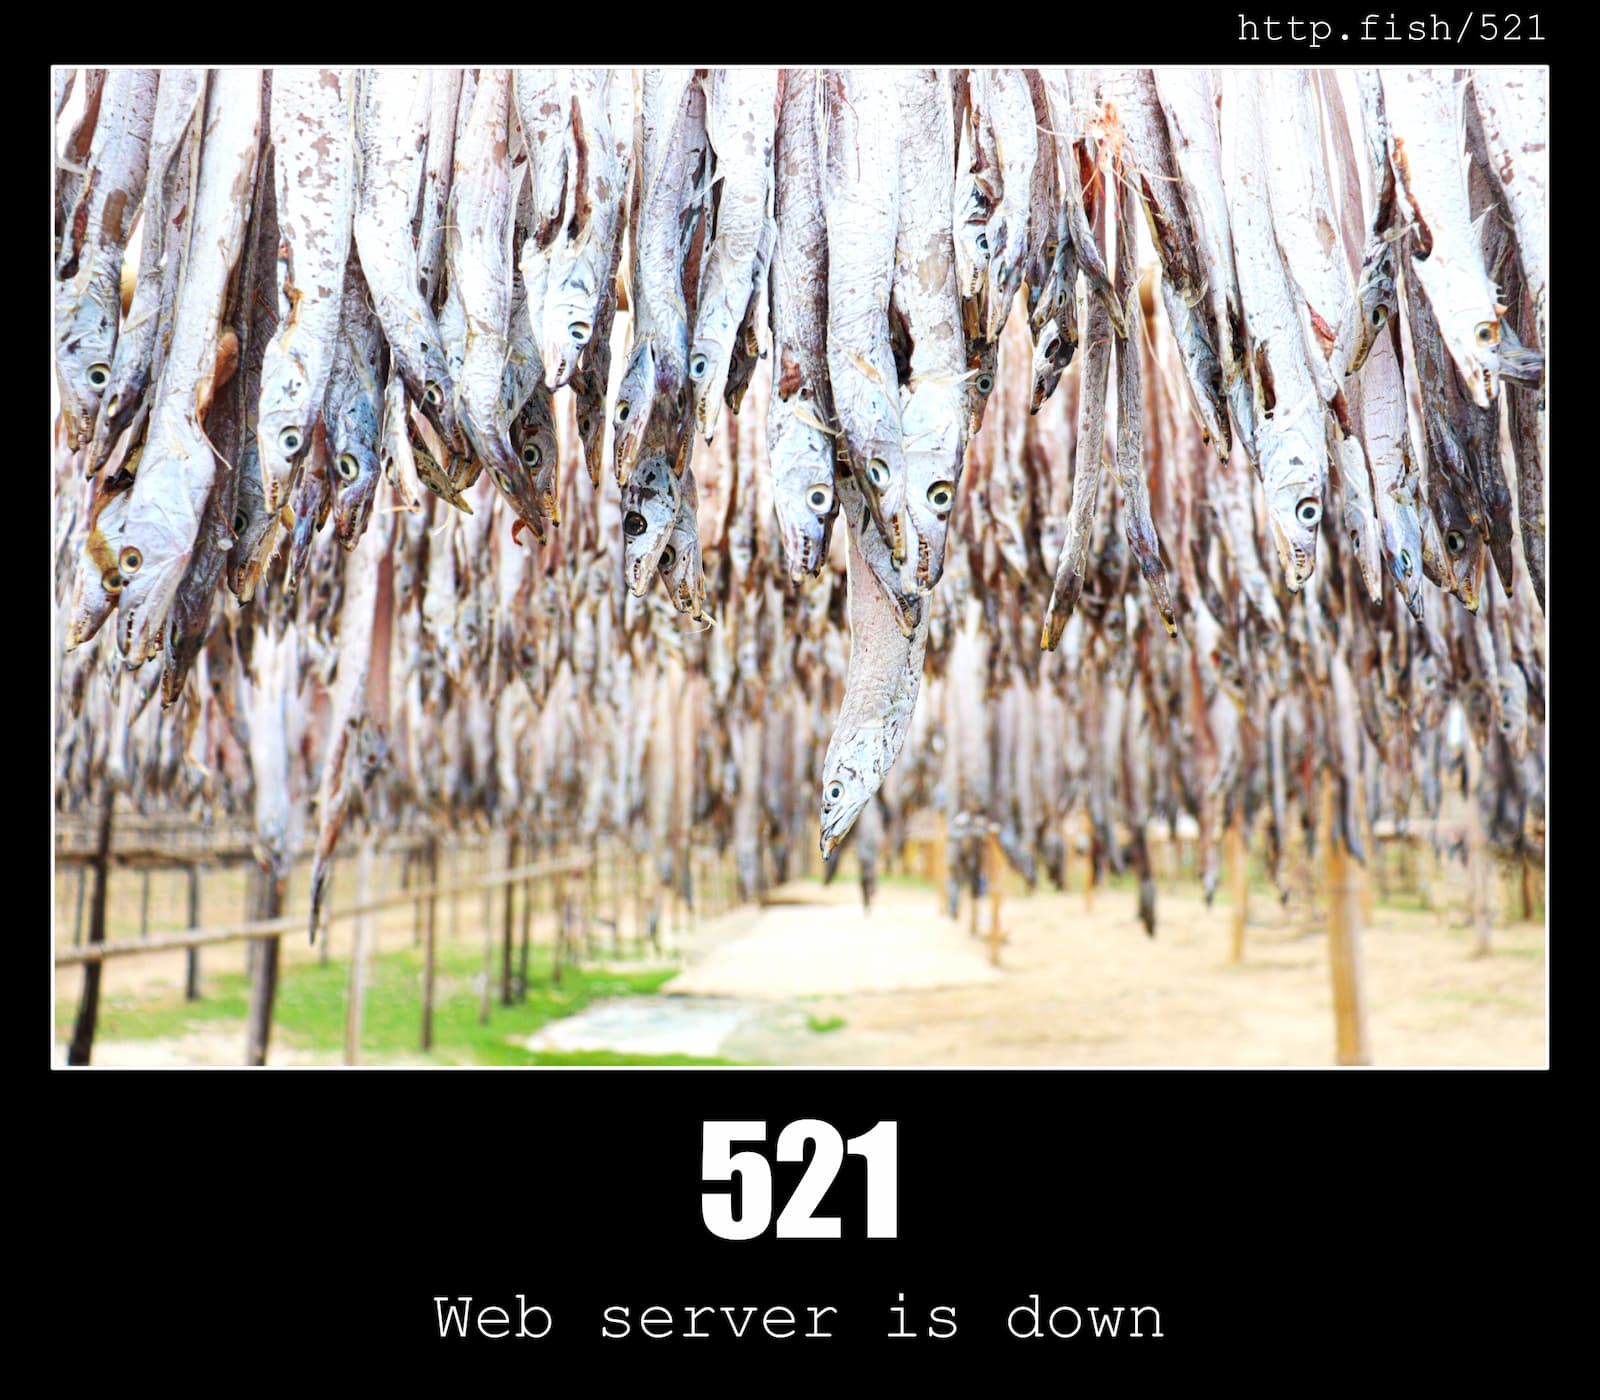 HTTP Status Code 521 Web server is down & Fish